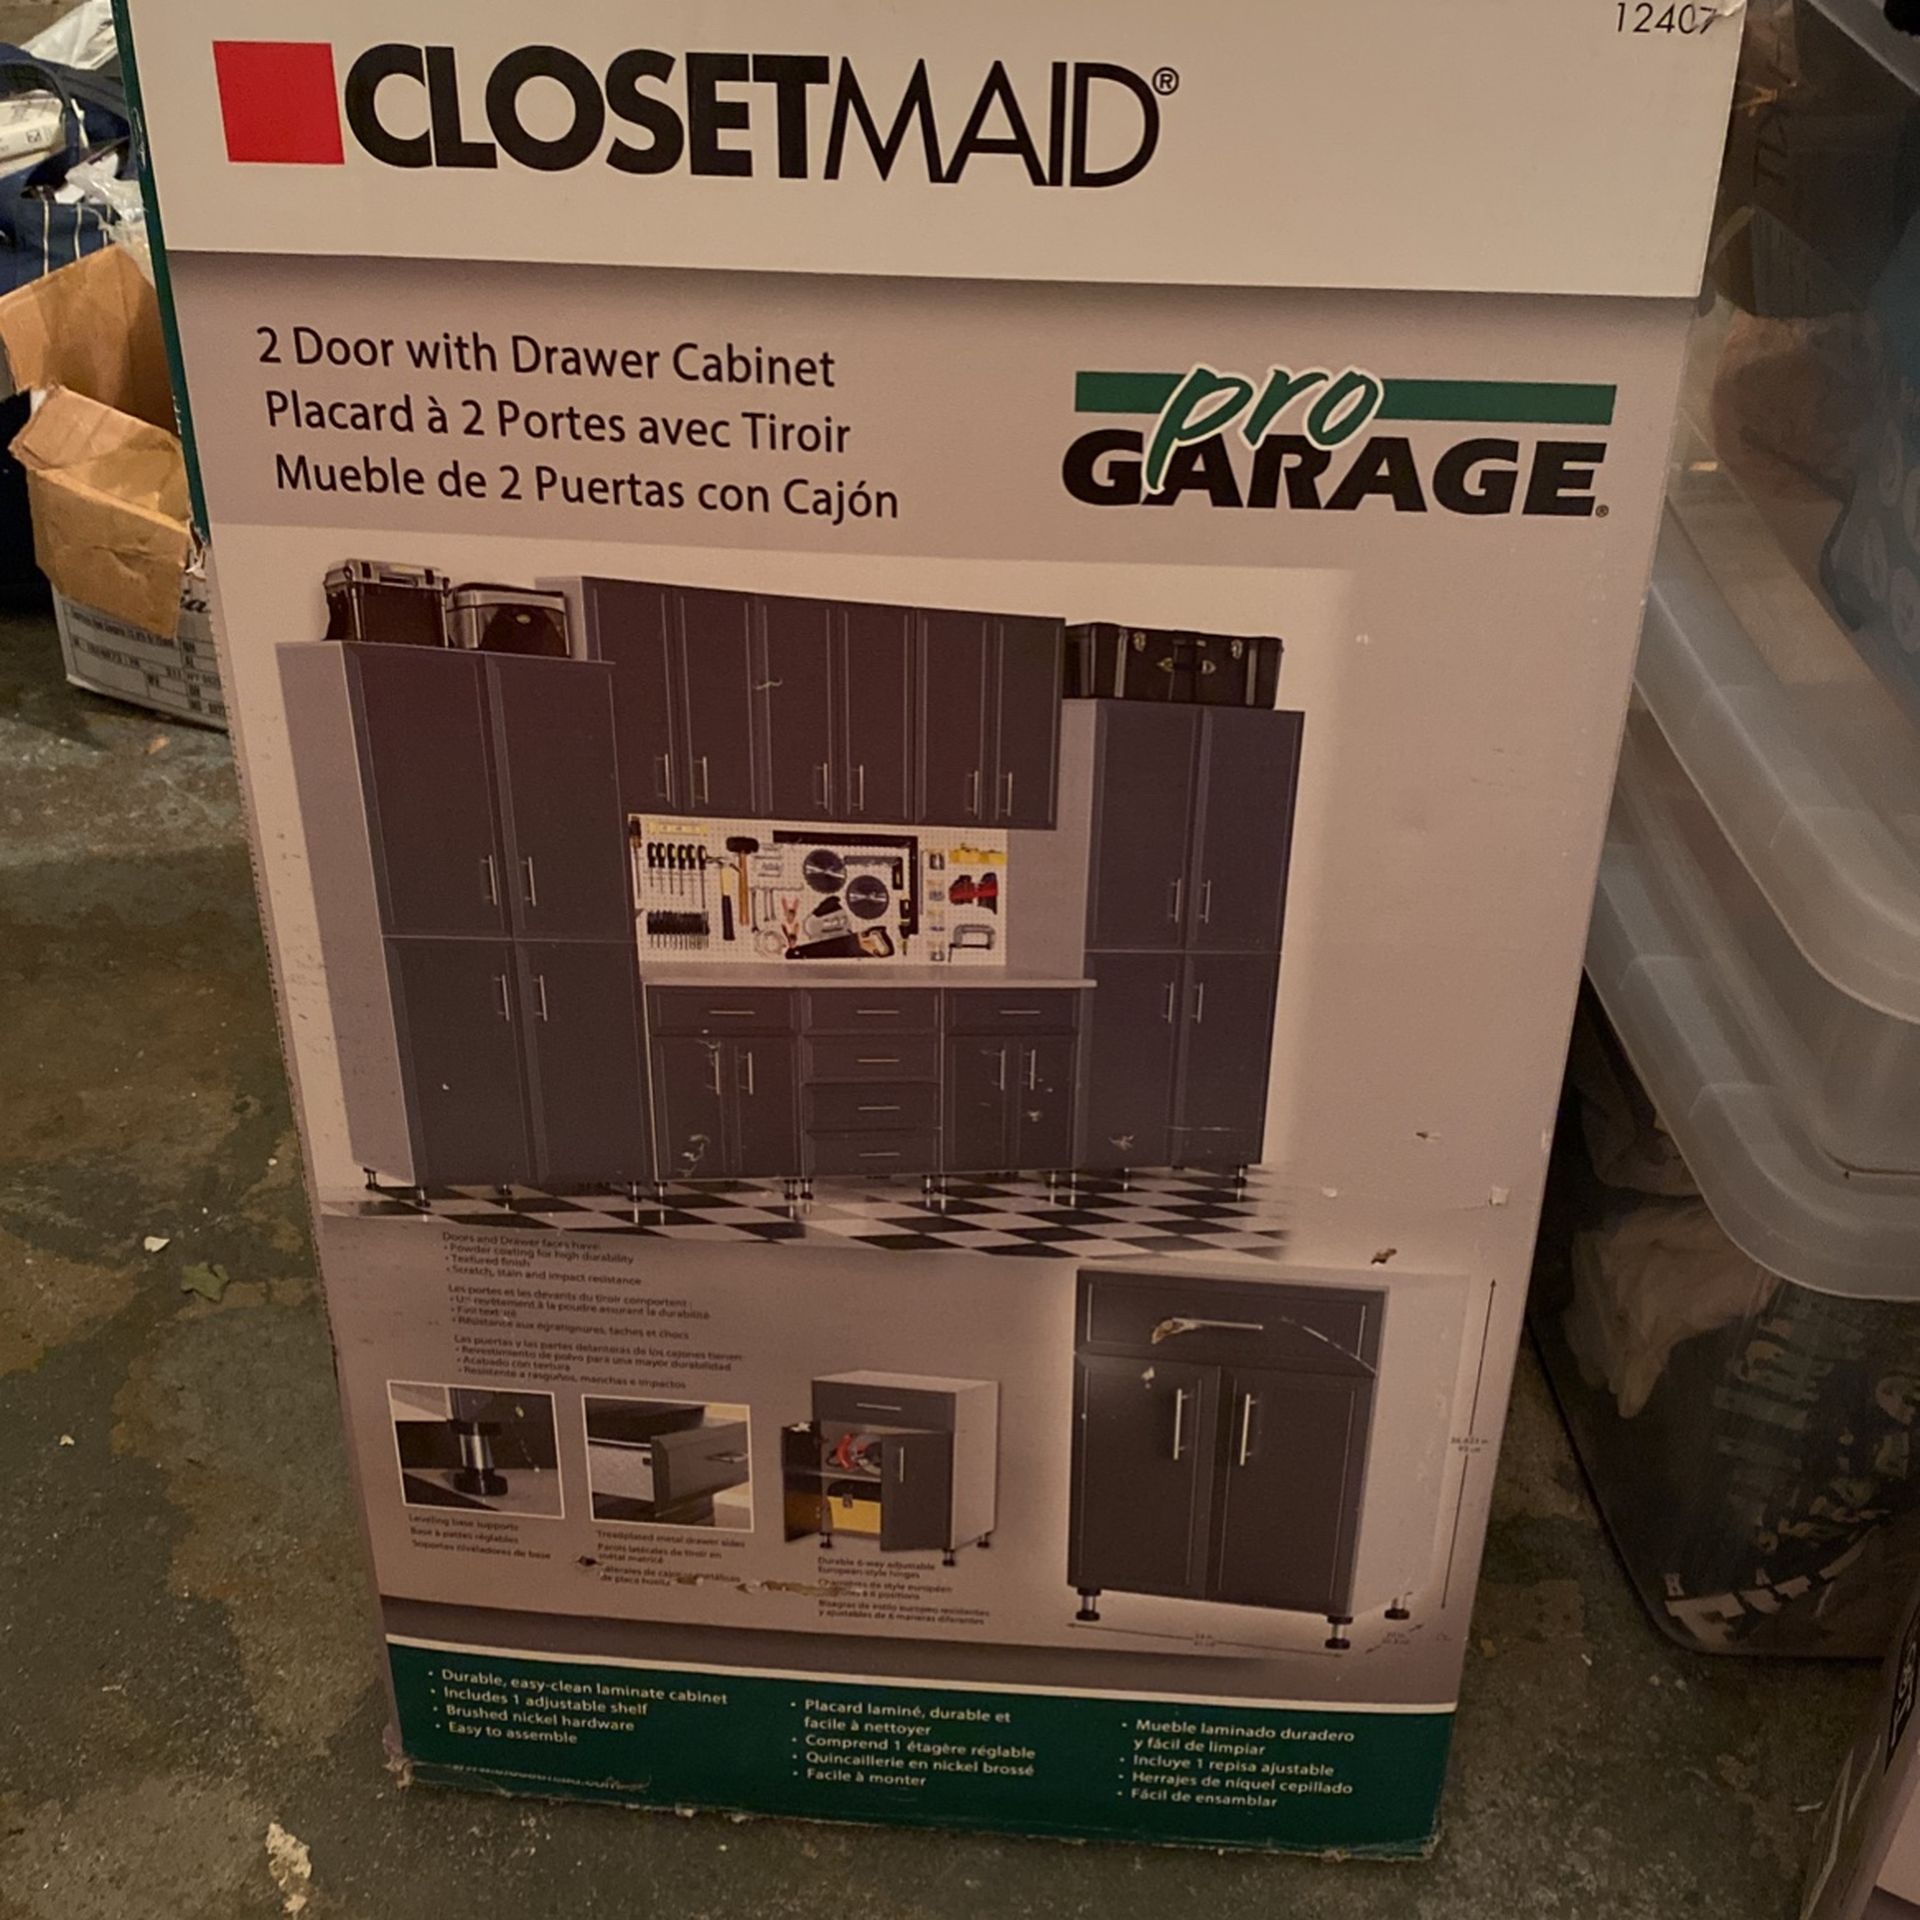 ClosetMaid Pro garage 2 Door With drawer cabinet